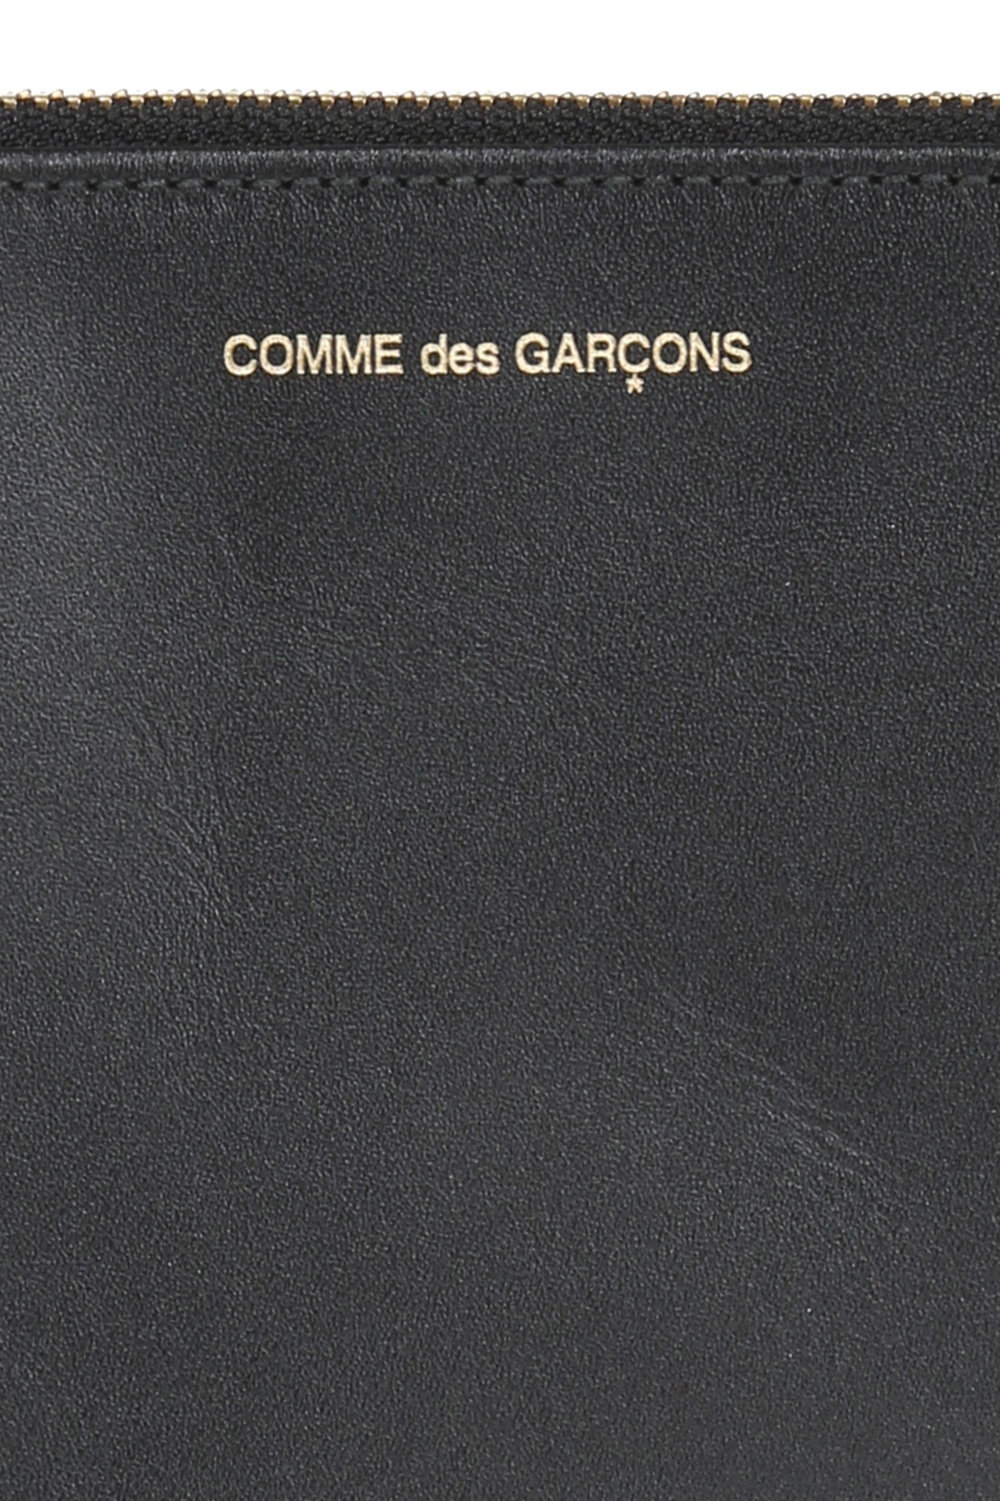 Comme des Garçons Embossed logo leather pouch